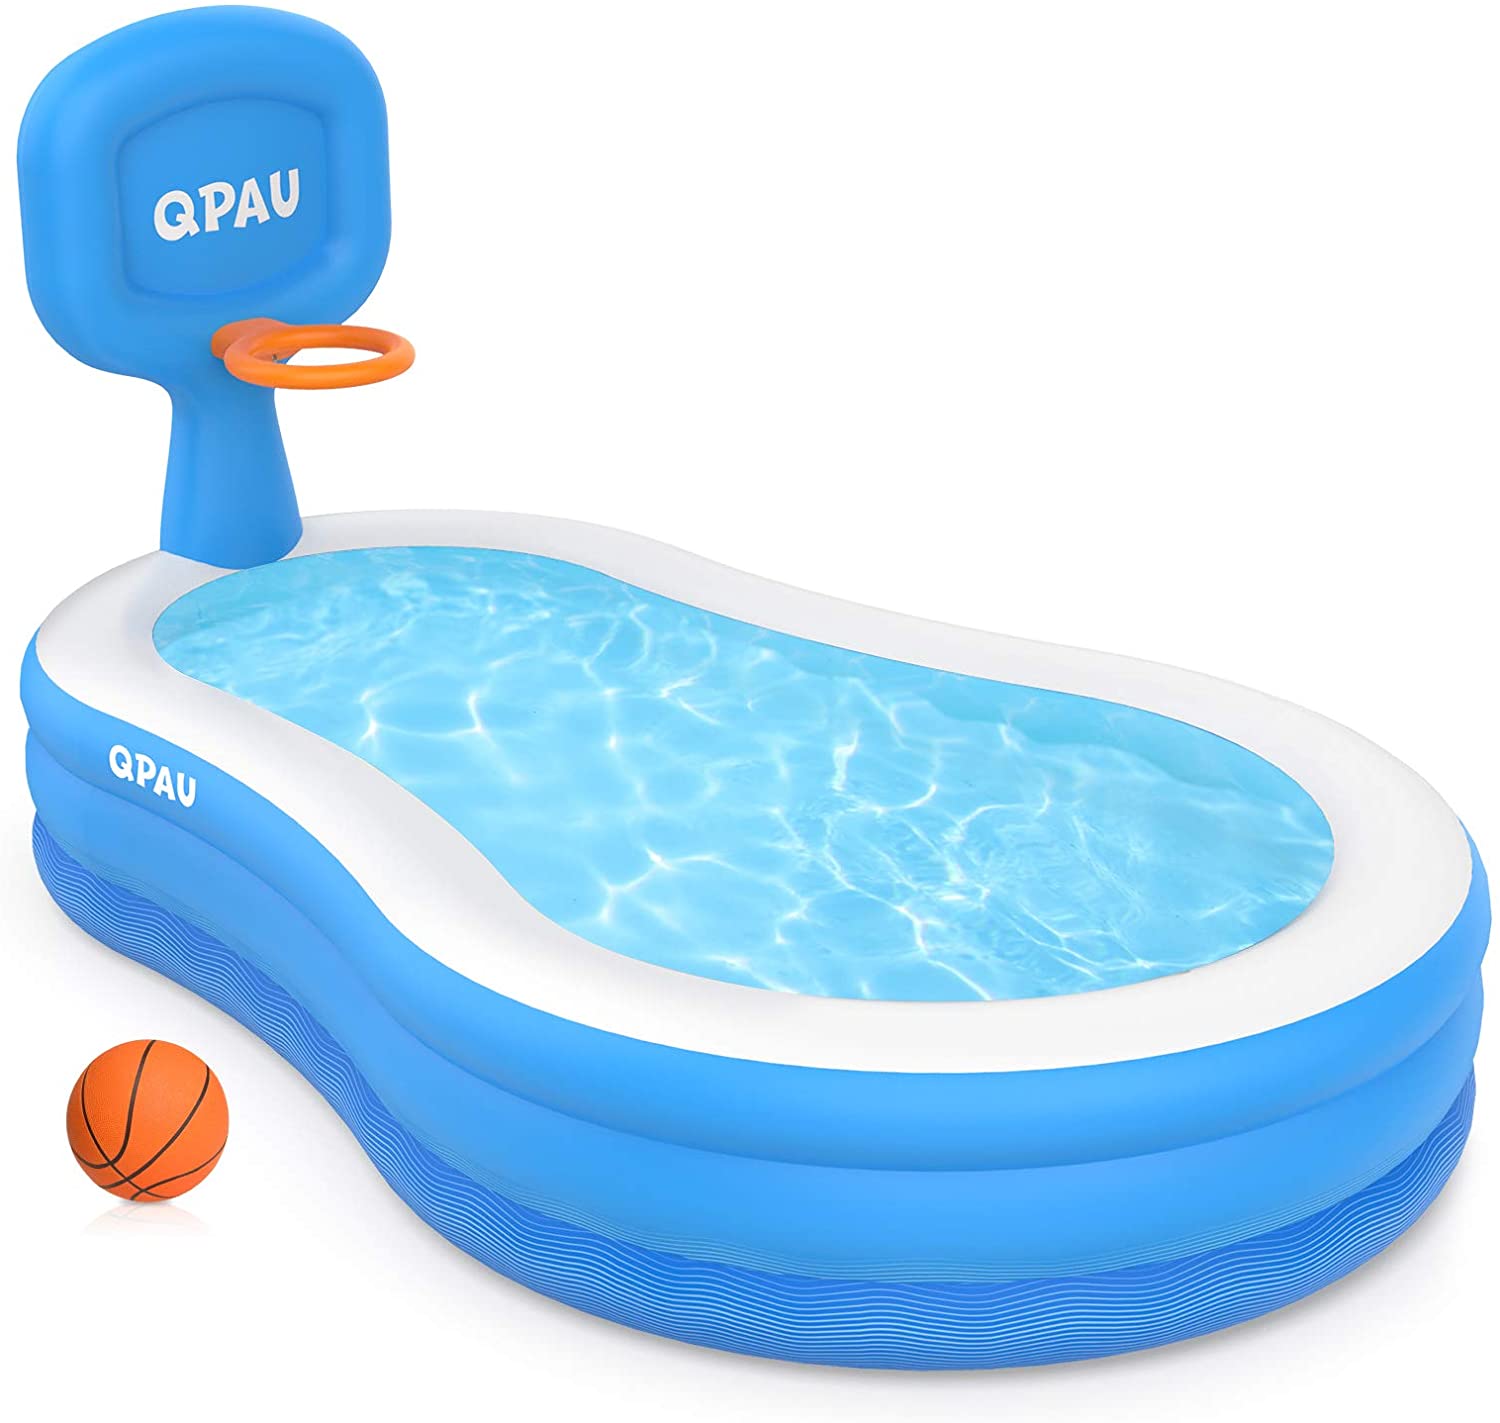 QPAU Inflatable Swimming Pool.jpg